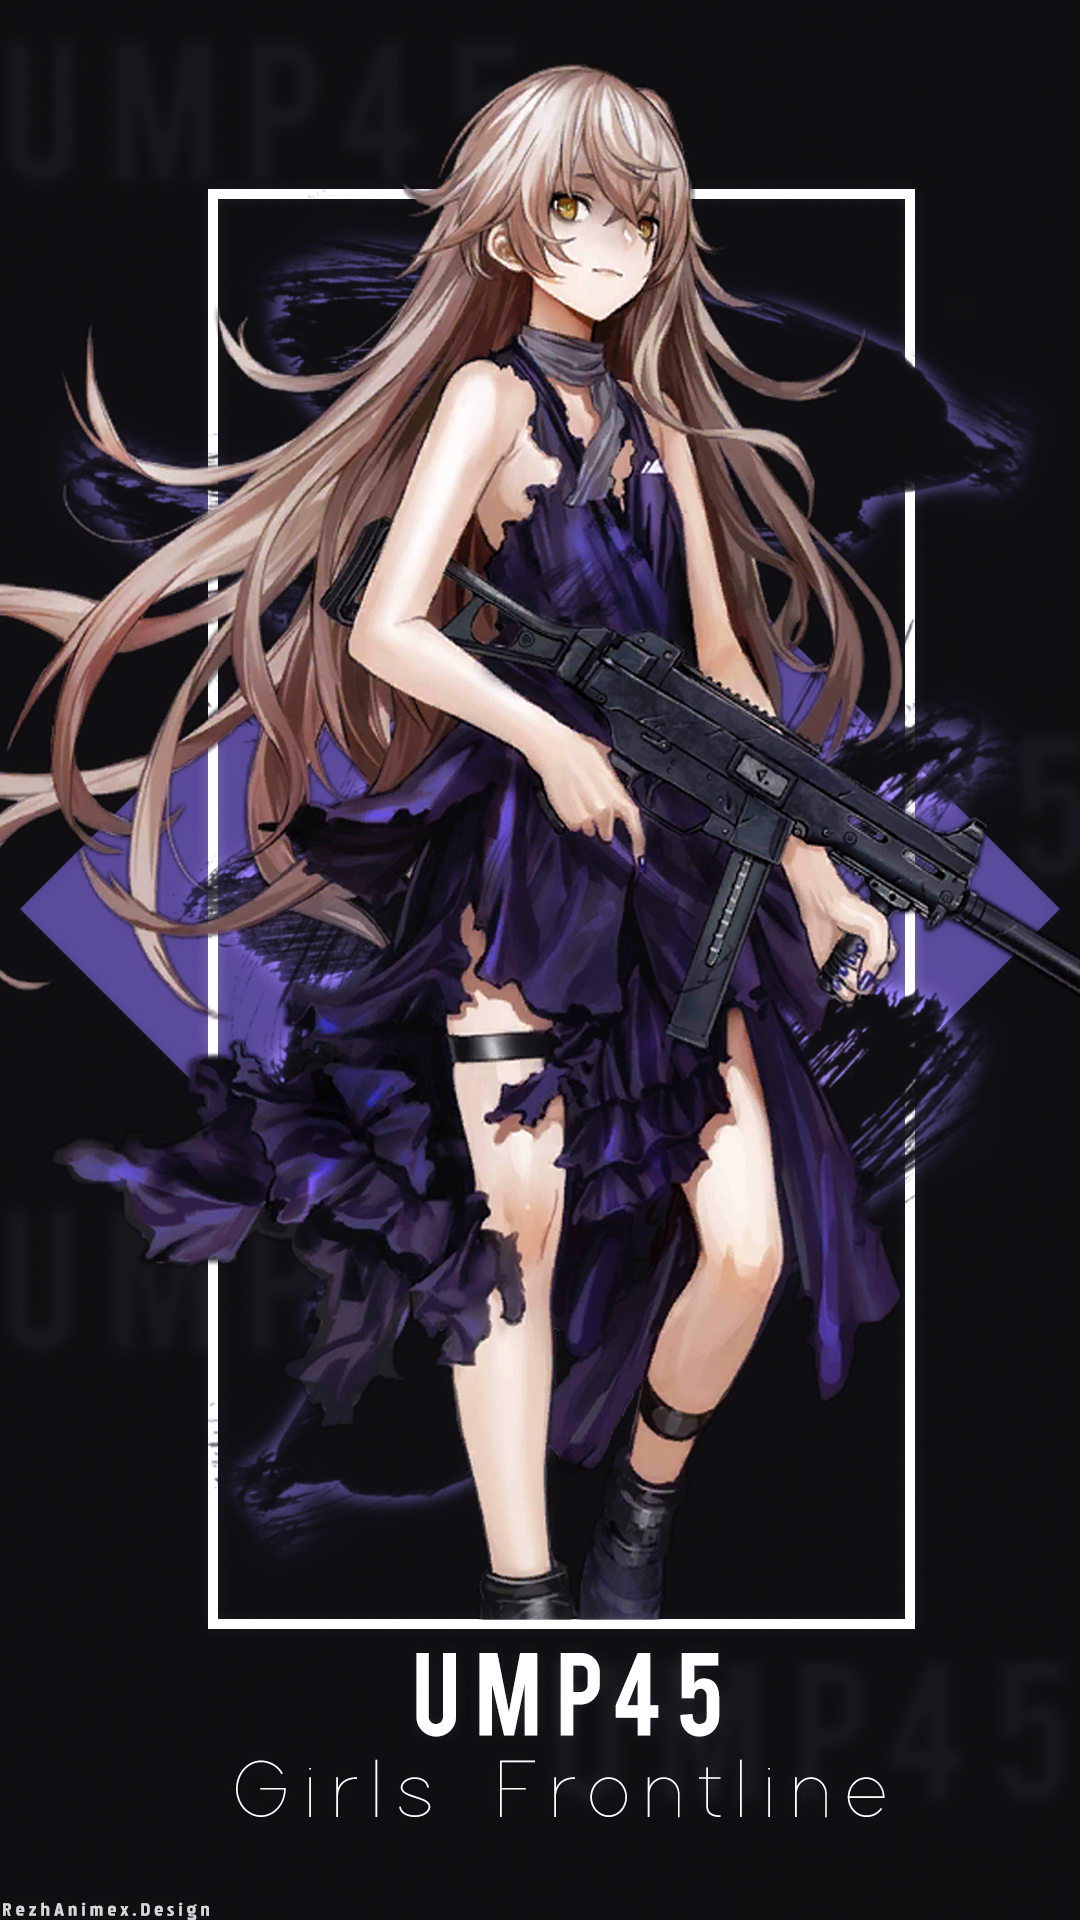 Girl With Weapon Girl Front Line Ump45 Girls Frontline Purple Clothing Long Hair Brunette Anime 1080x1920